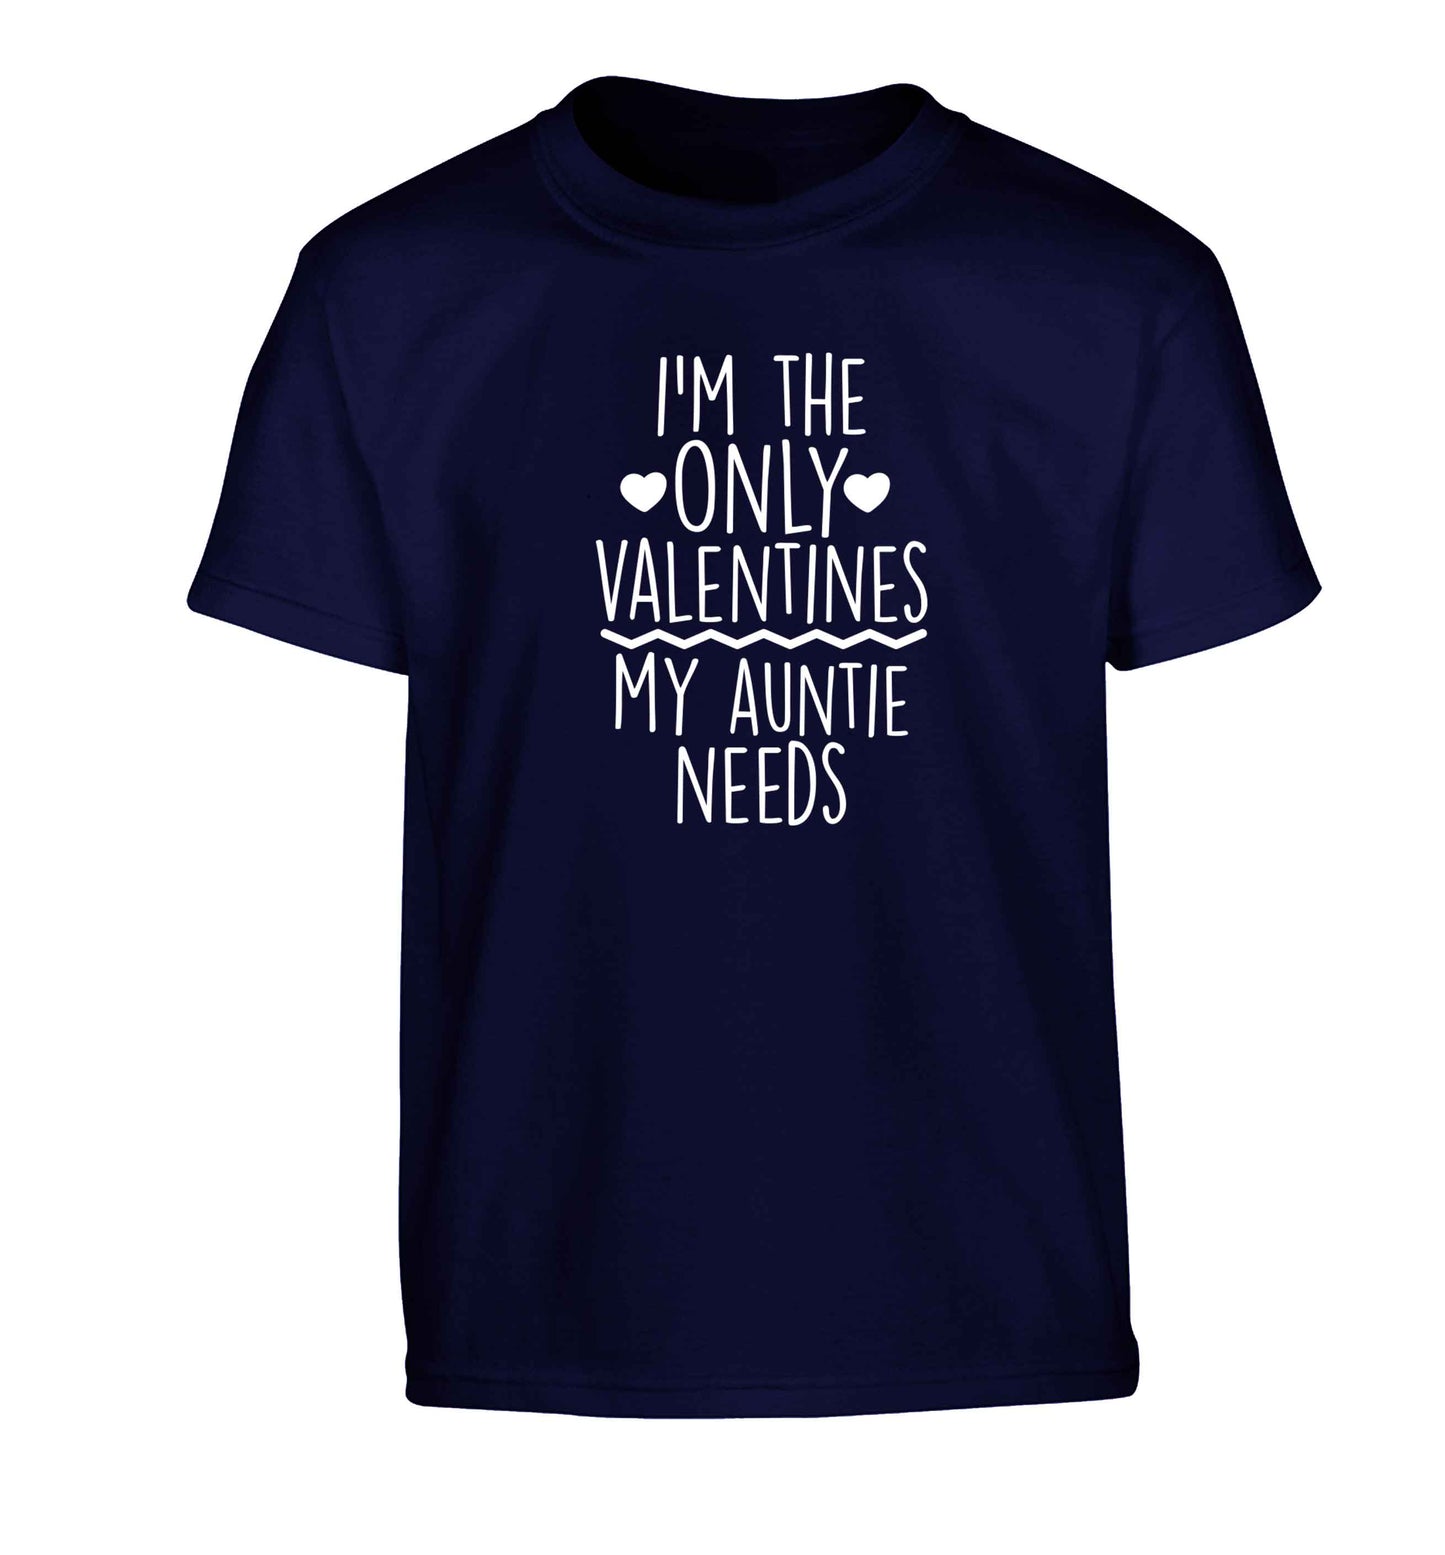 I'm the only valentines my auntie needs Children's navy Tshirt 12-13 Years